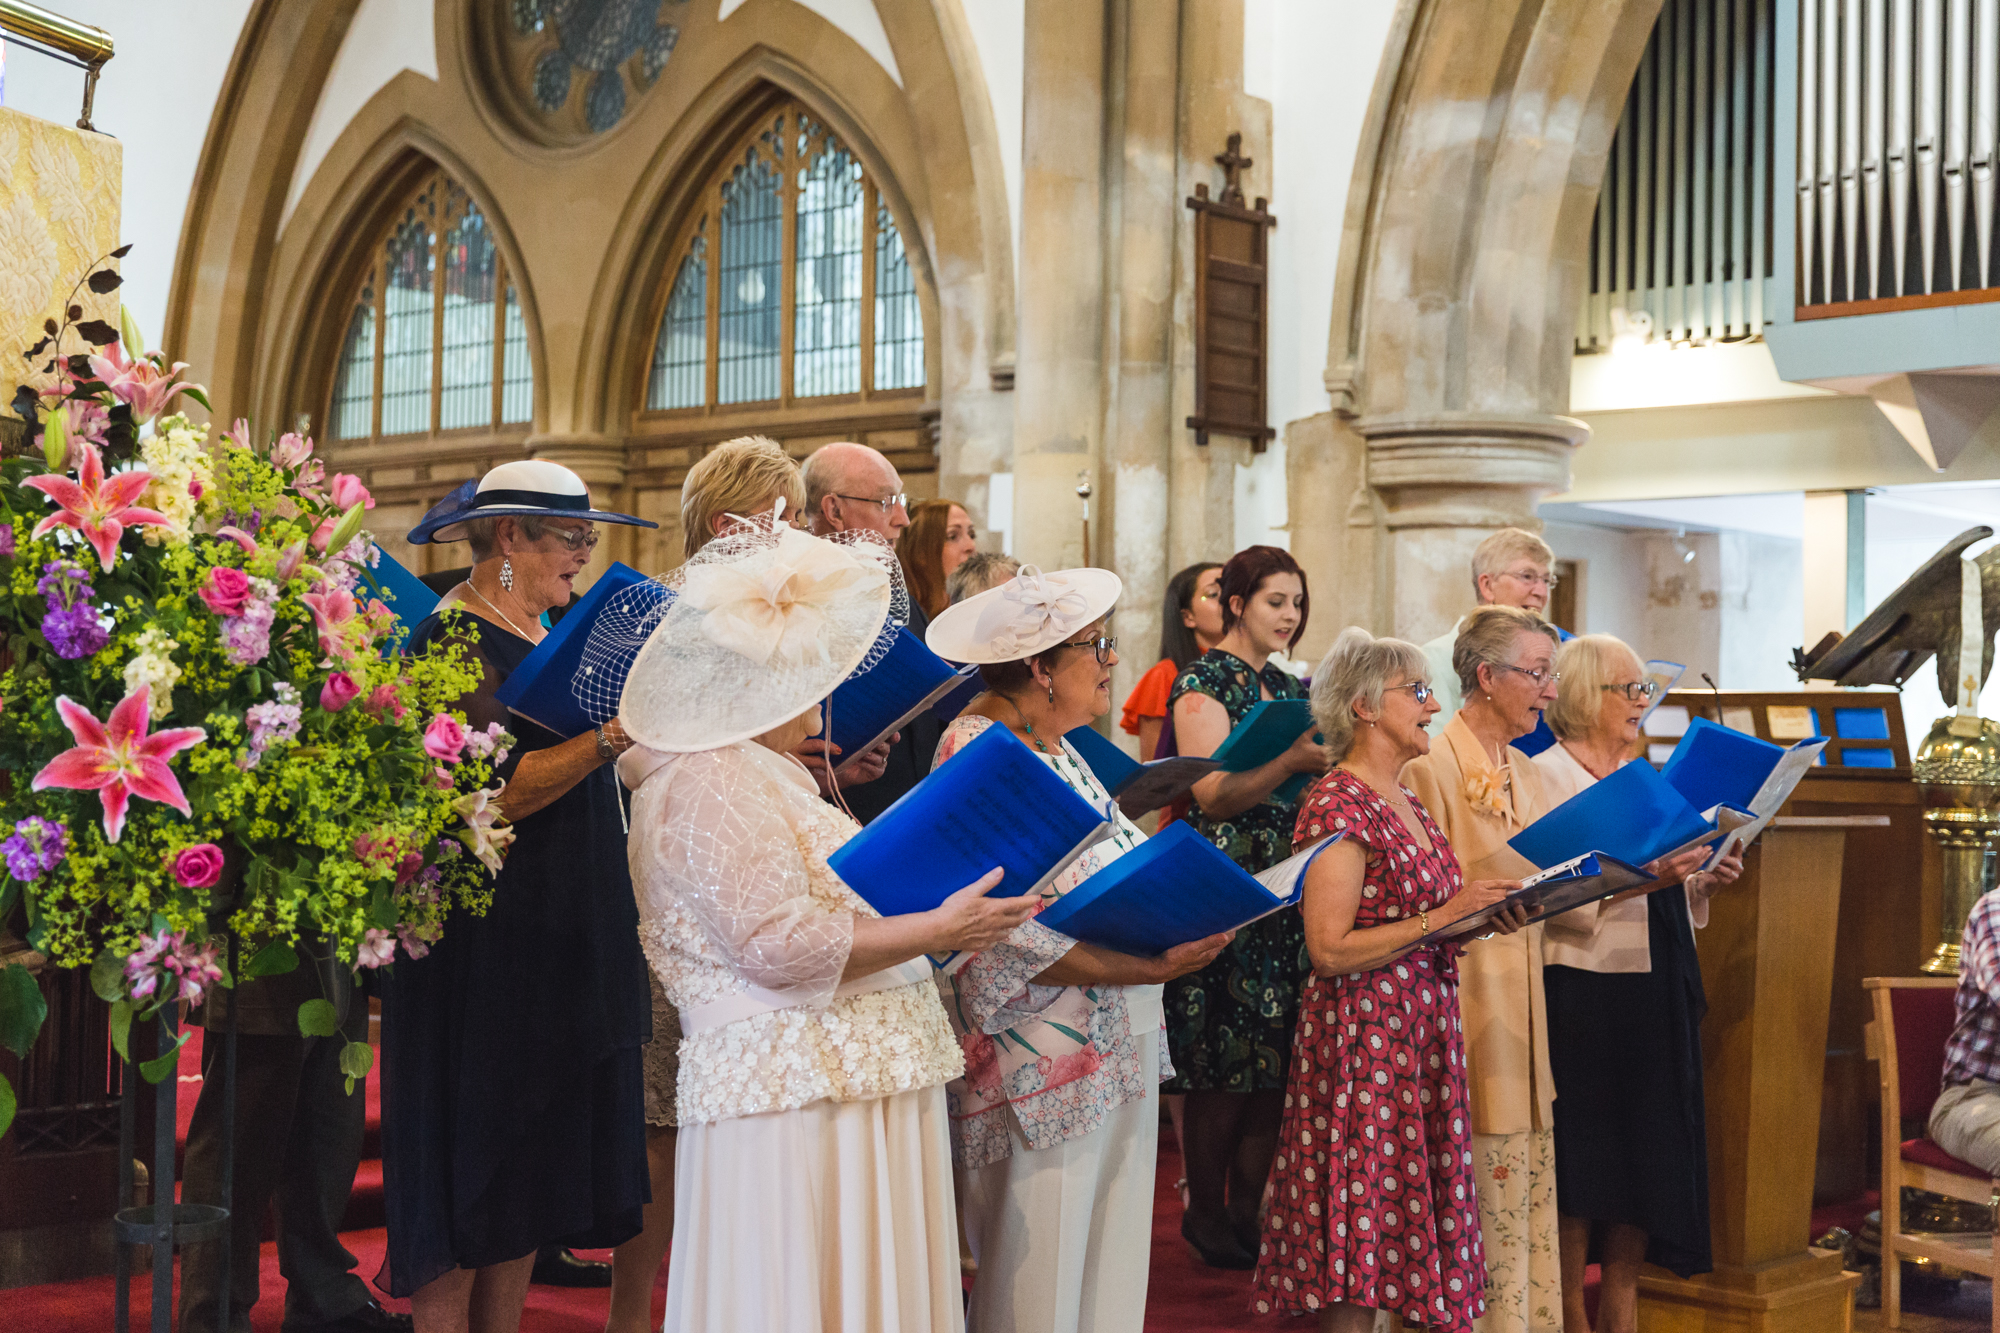 Church choir singing at a wedding at St Martons Church, Caerphilly